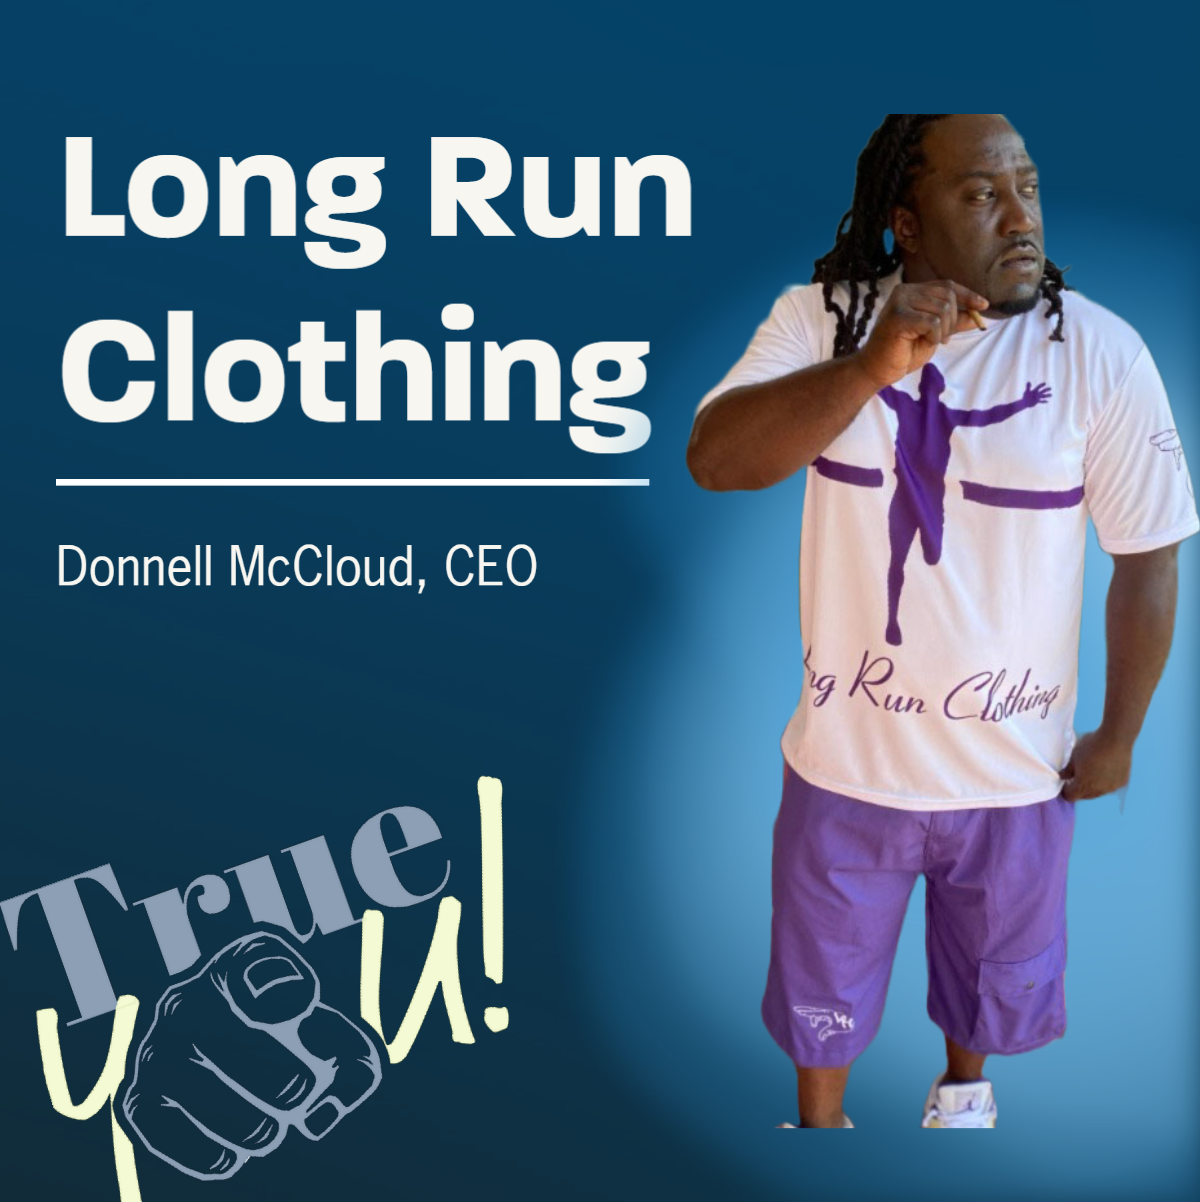 Donnell McCloud models Long Run Clothing